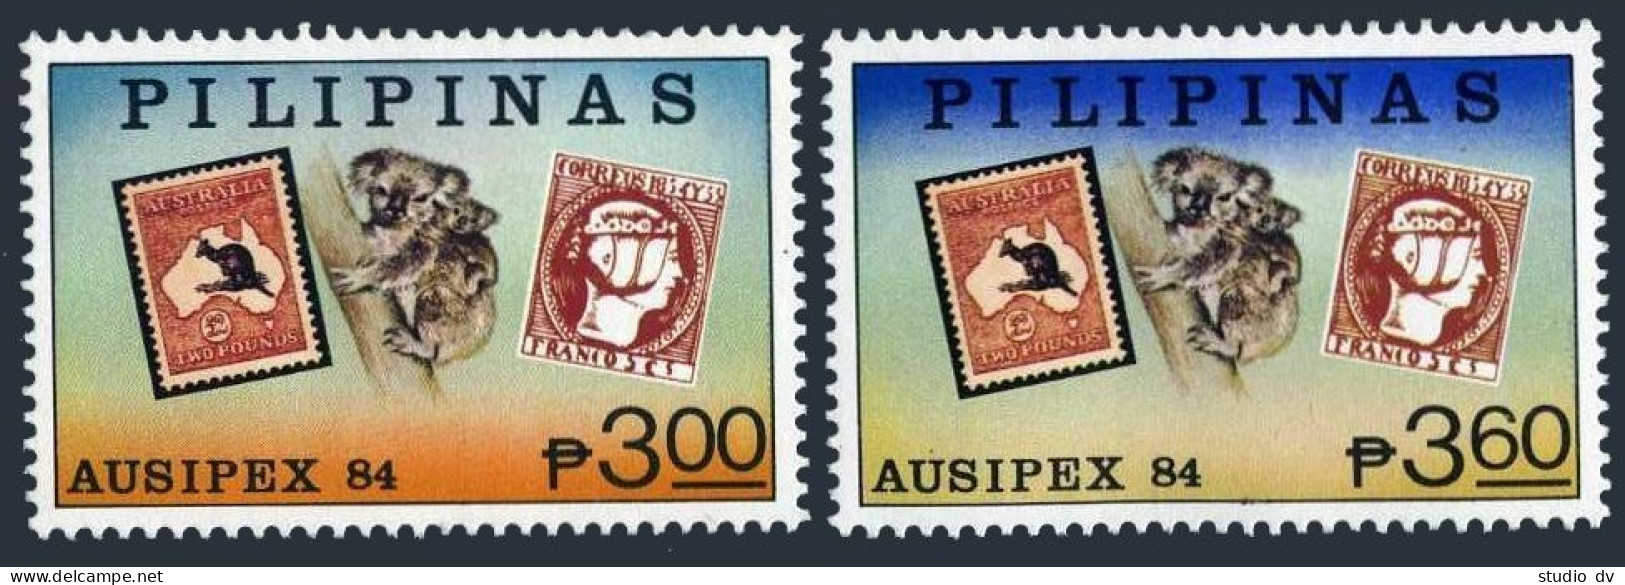 Philippines 1708-1709,1710 Sheets Perf & Imprerf. MNH. AUSIPEX-1984. Koalas. - Philippinen